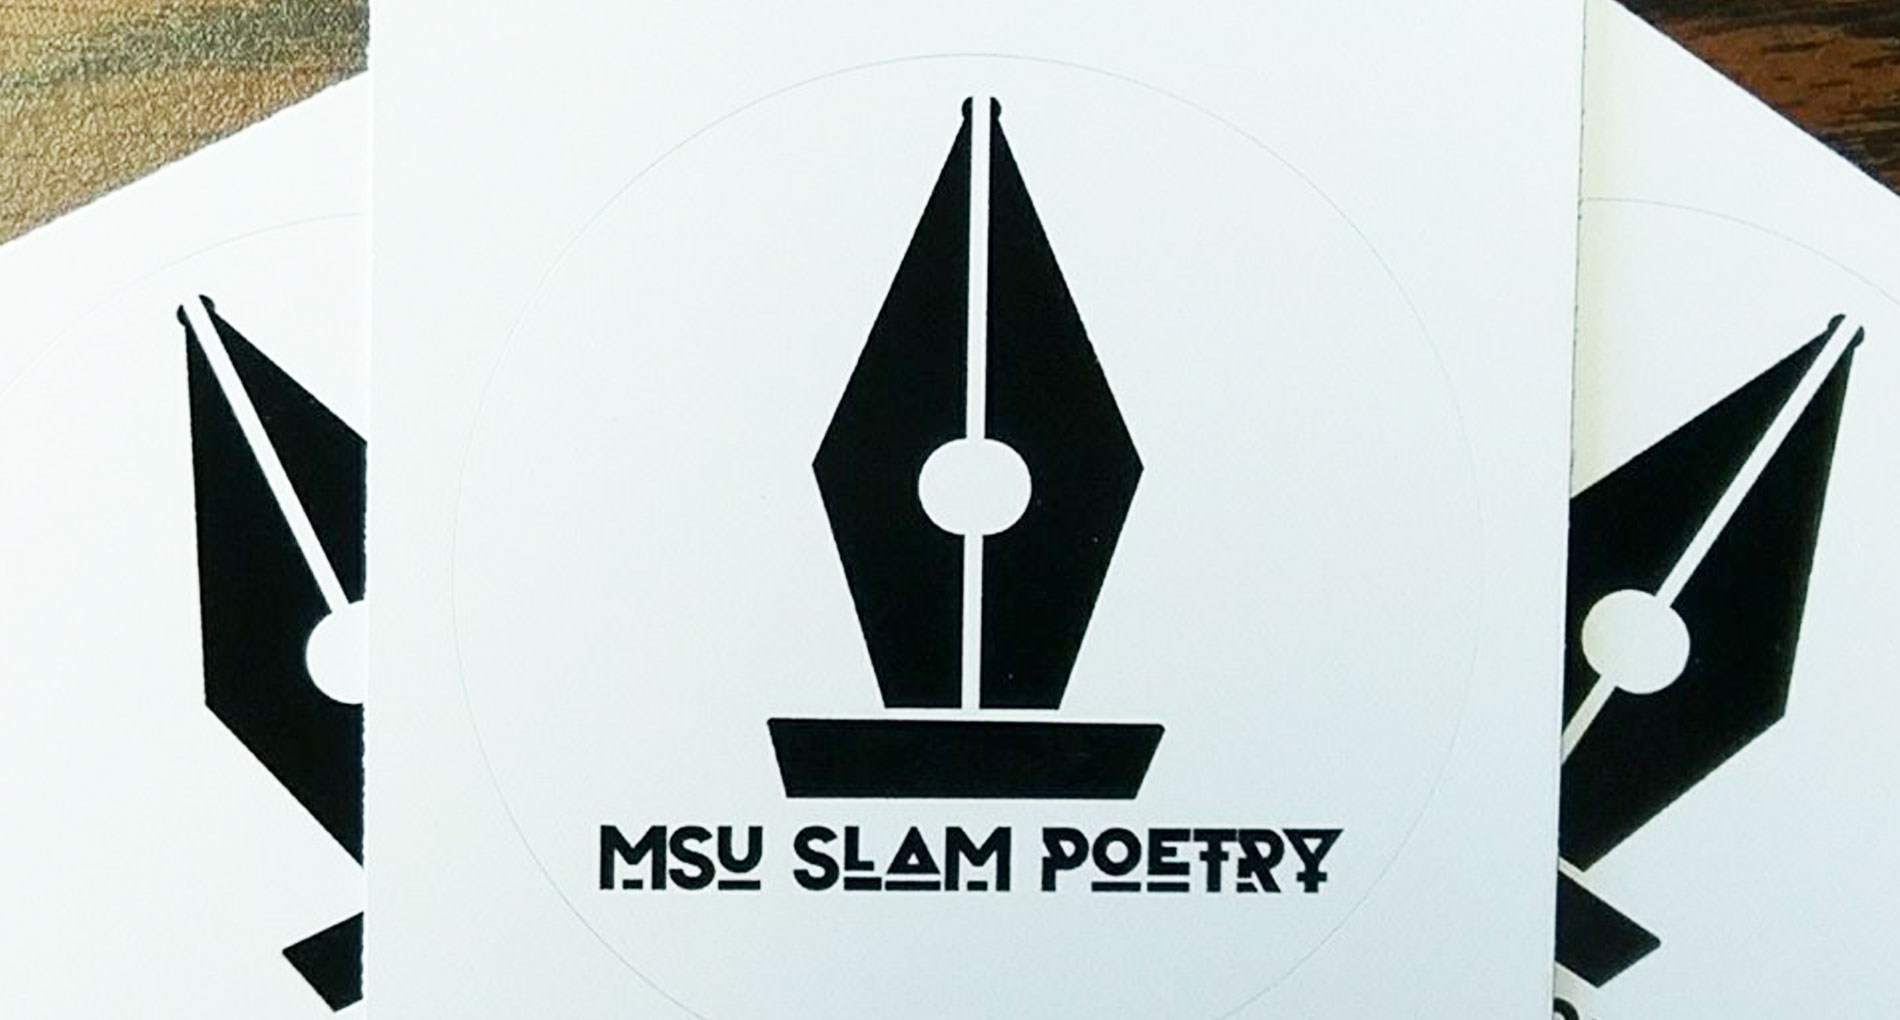 black vintage pen tip graphic with MSU Slam Poetry underneath